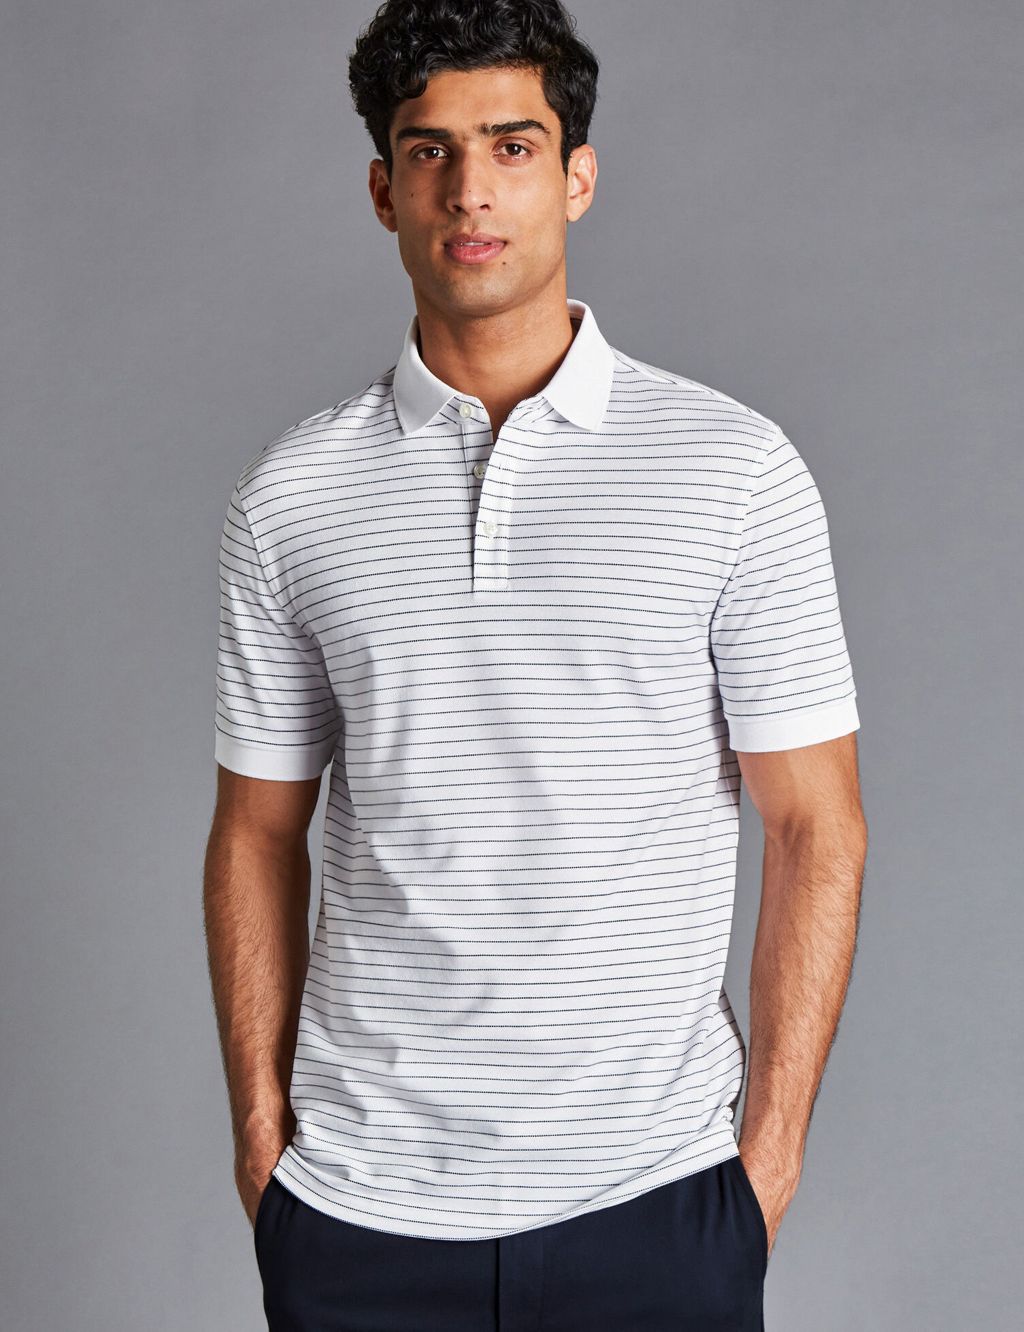 Cotton Rich Striped Pique Polo Shirt image 1